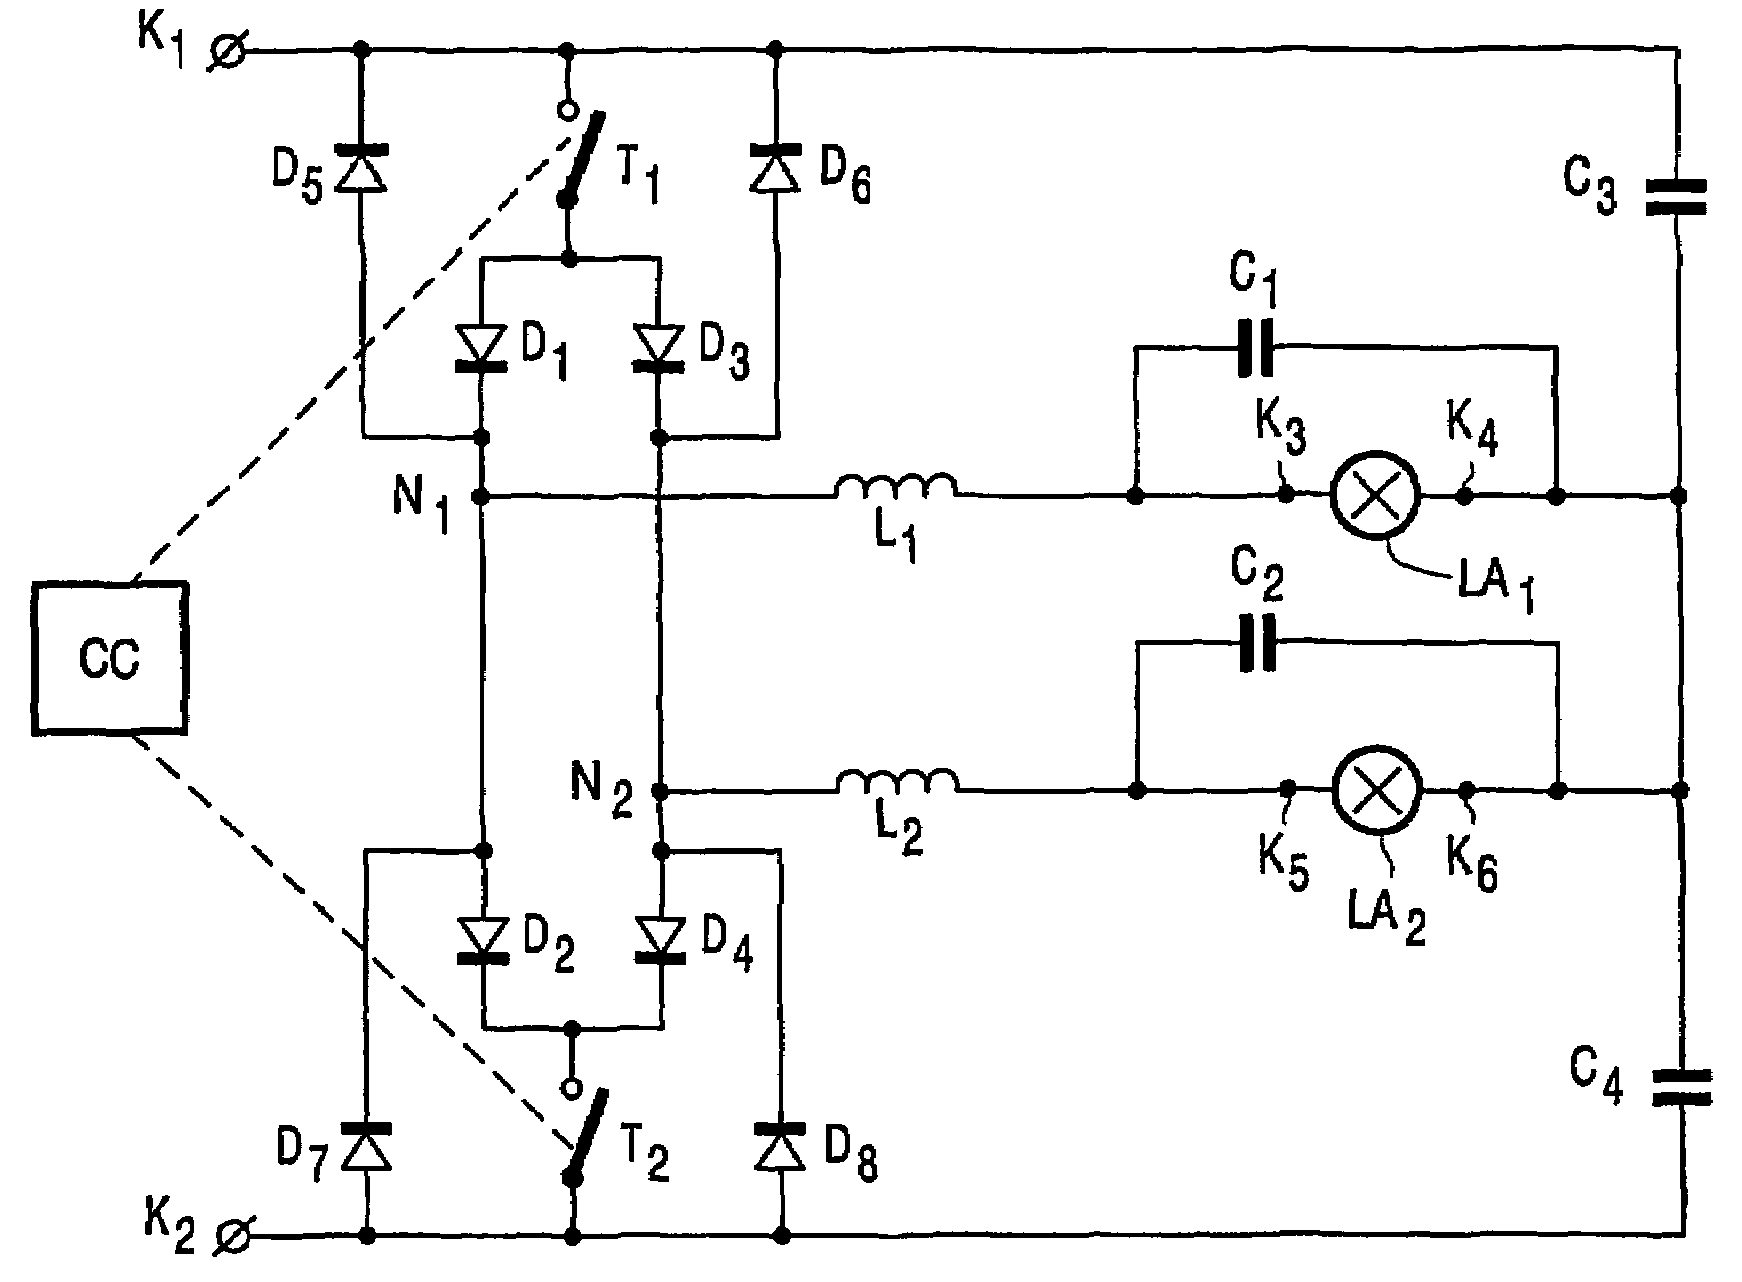 Circuit arrangement for operating discharge lamps